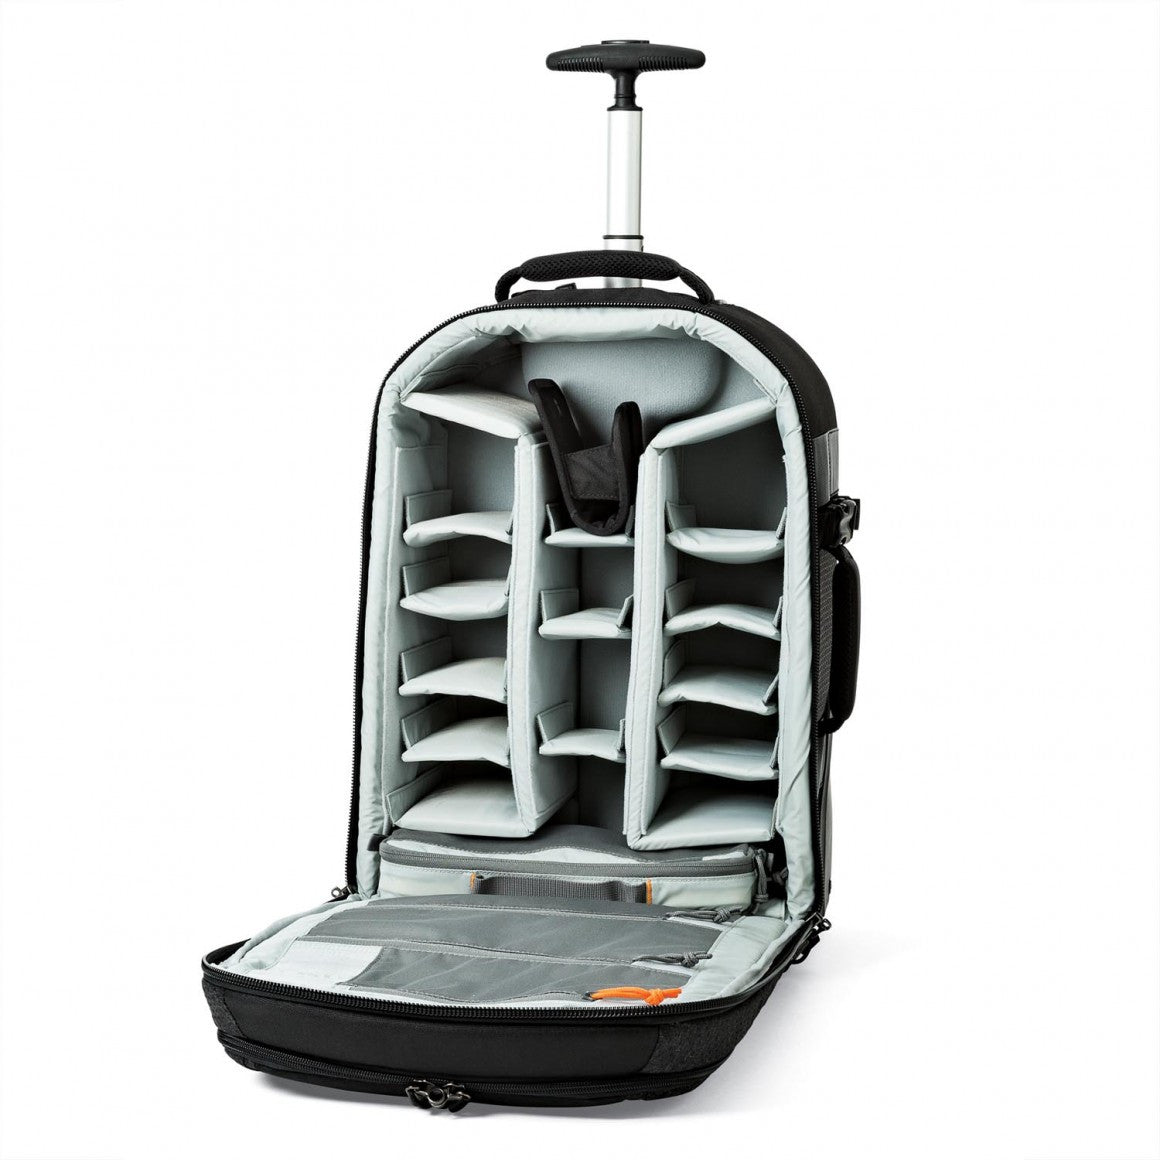 Lowepro Pro Runner RL x450 AW II Backpack (Black), bags roller bags, Lowepro - Pictureline  - 6